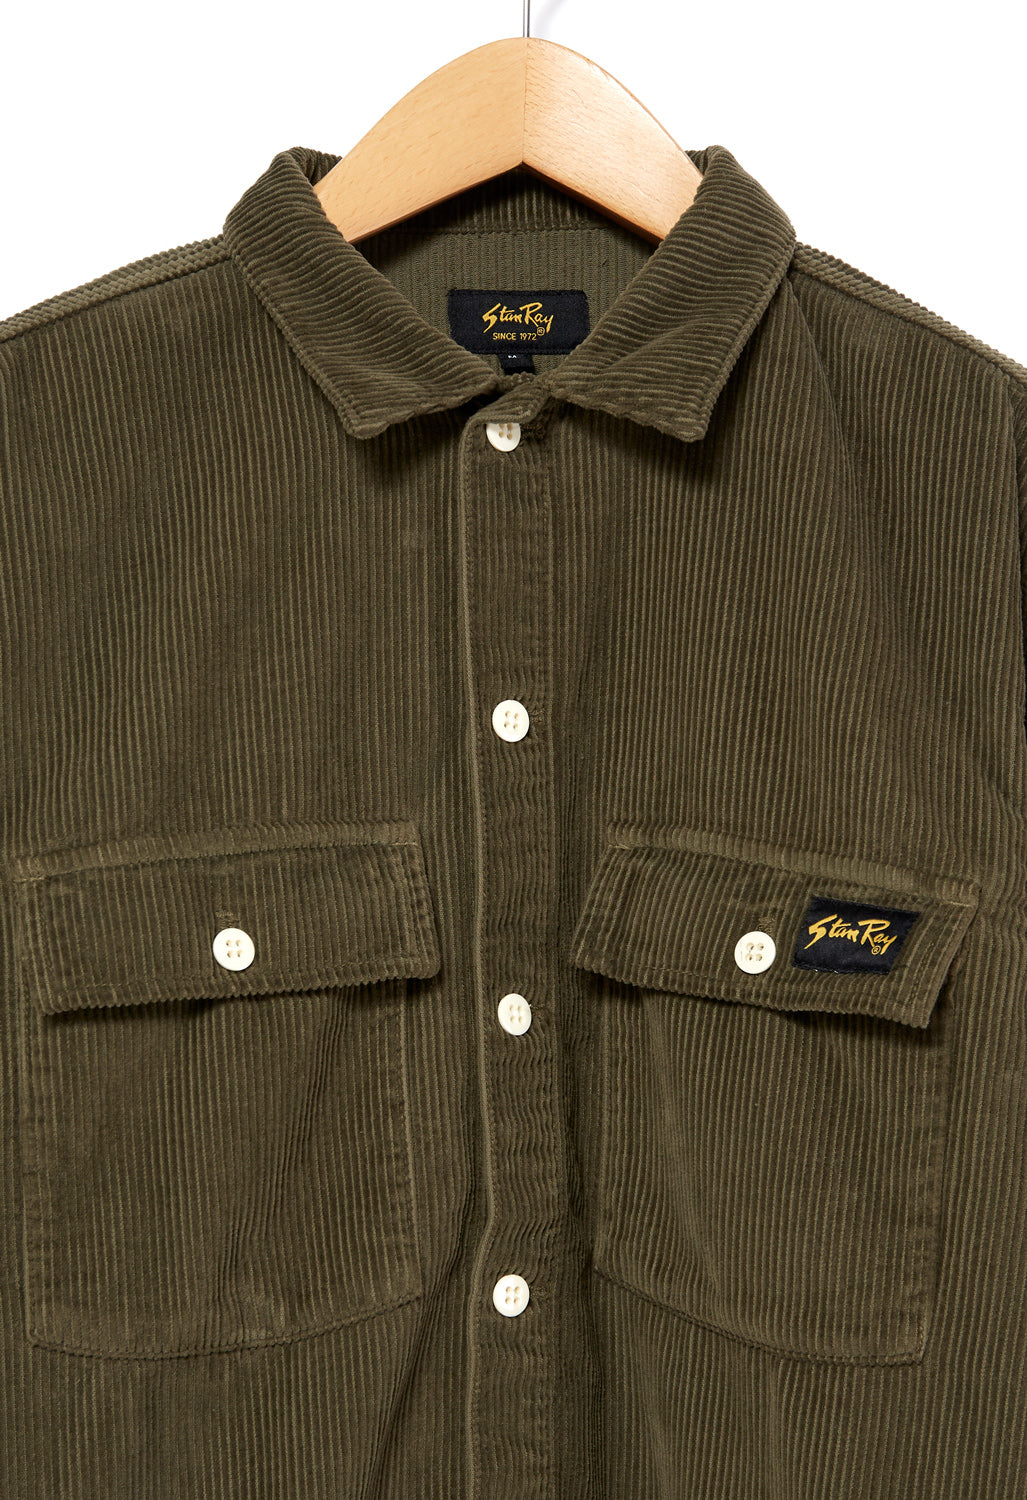 Stan Ray Men's CPO Shirt - Olive Cord